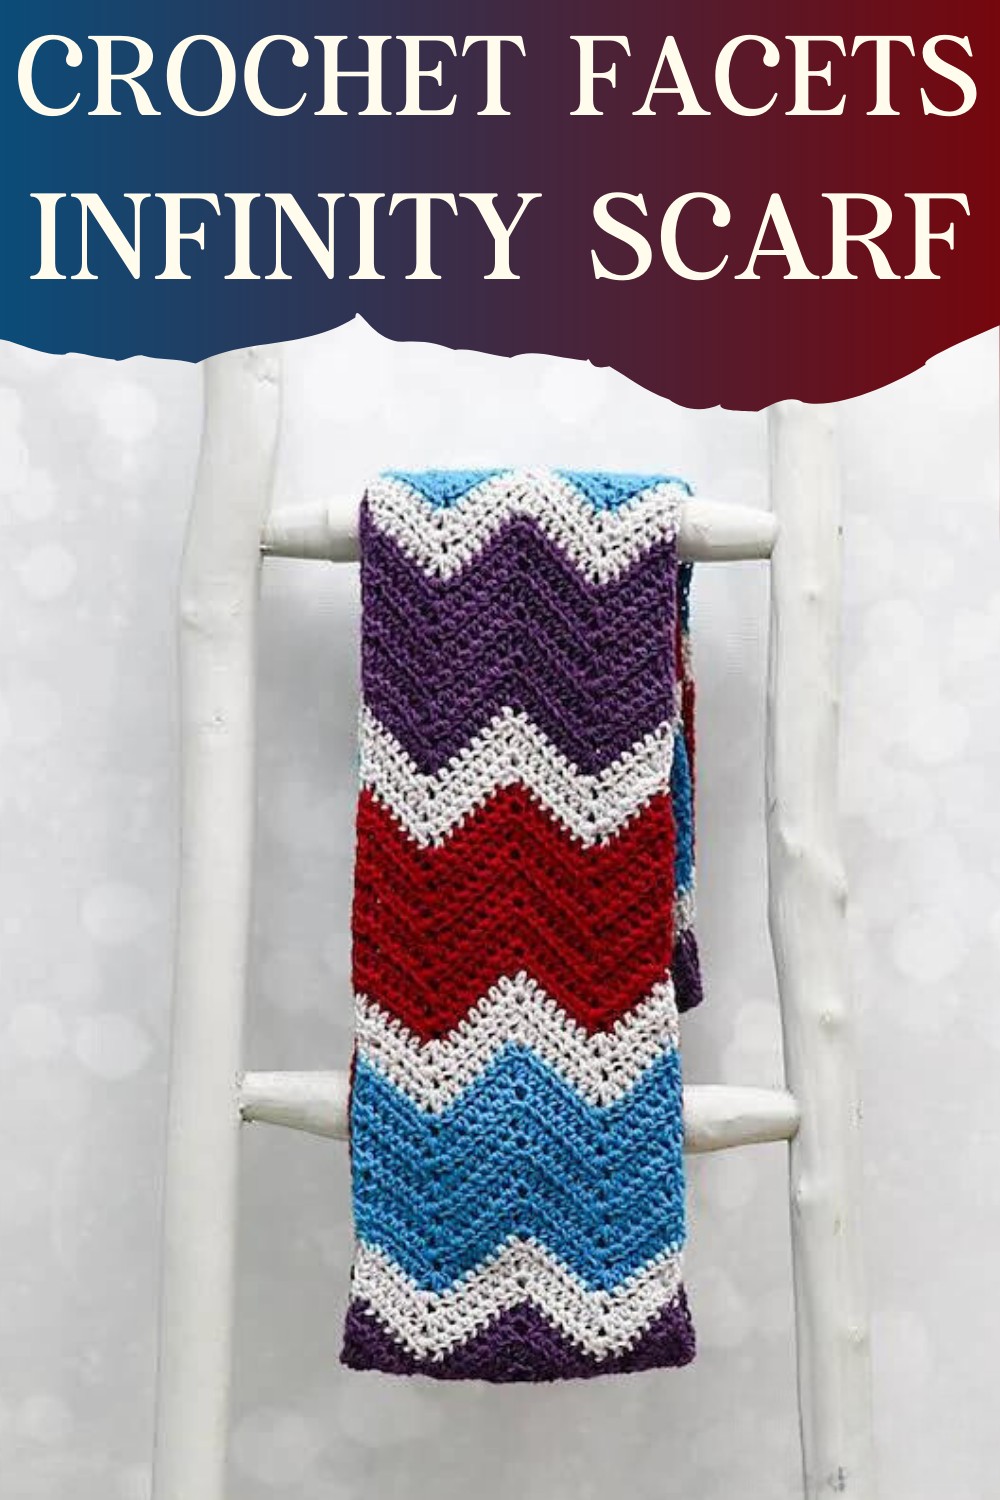 Crochet Facets Infinity Scarf Pattern